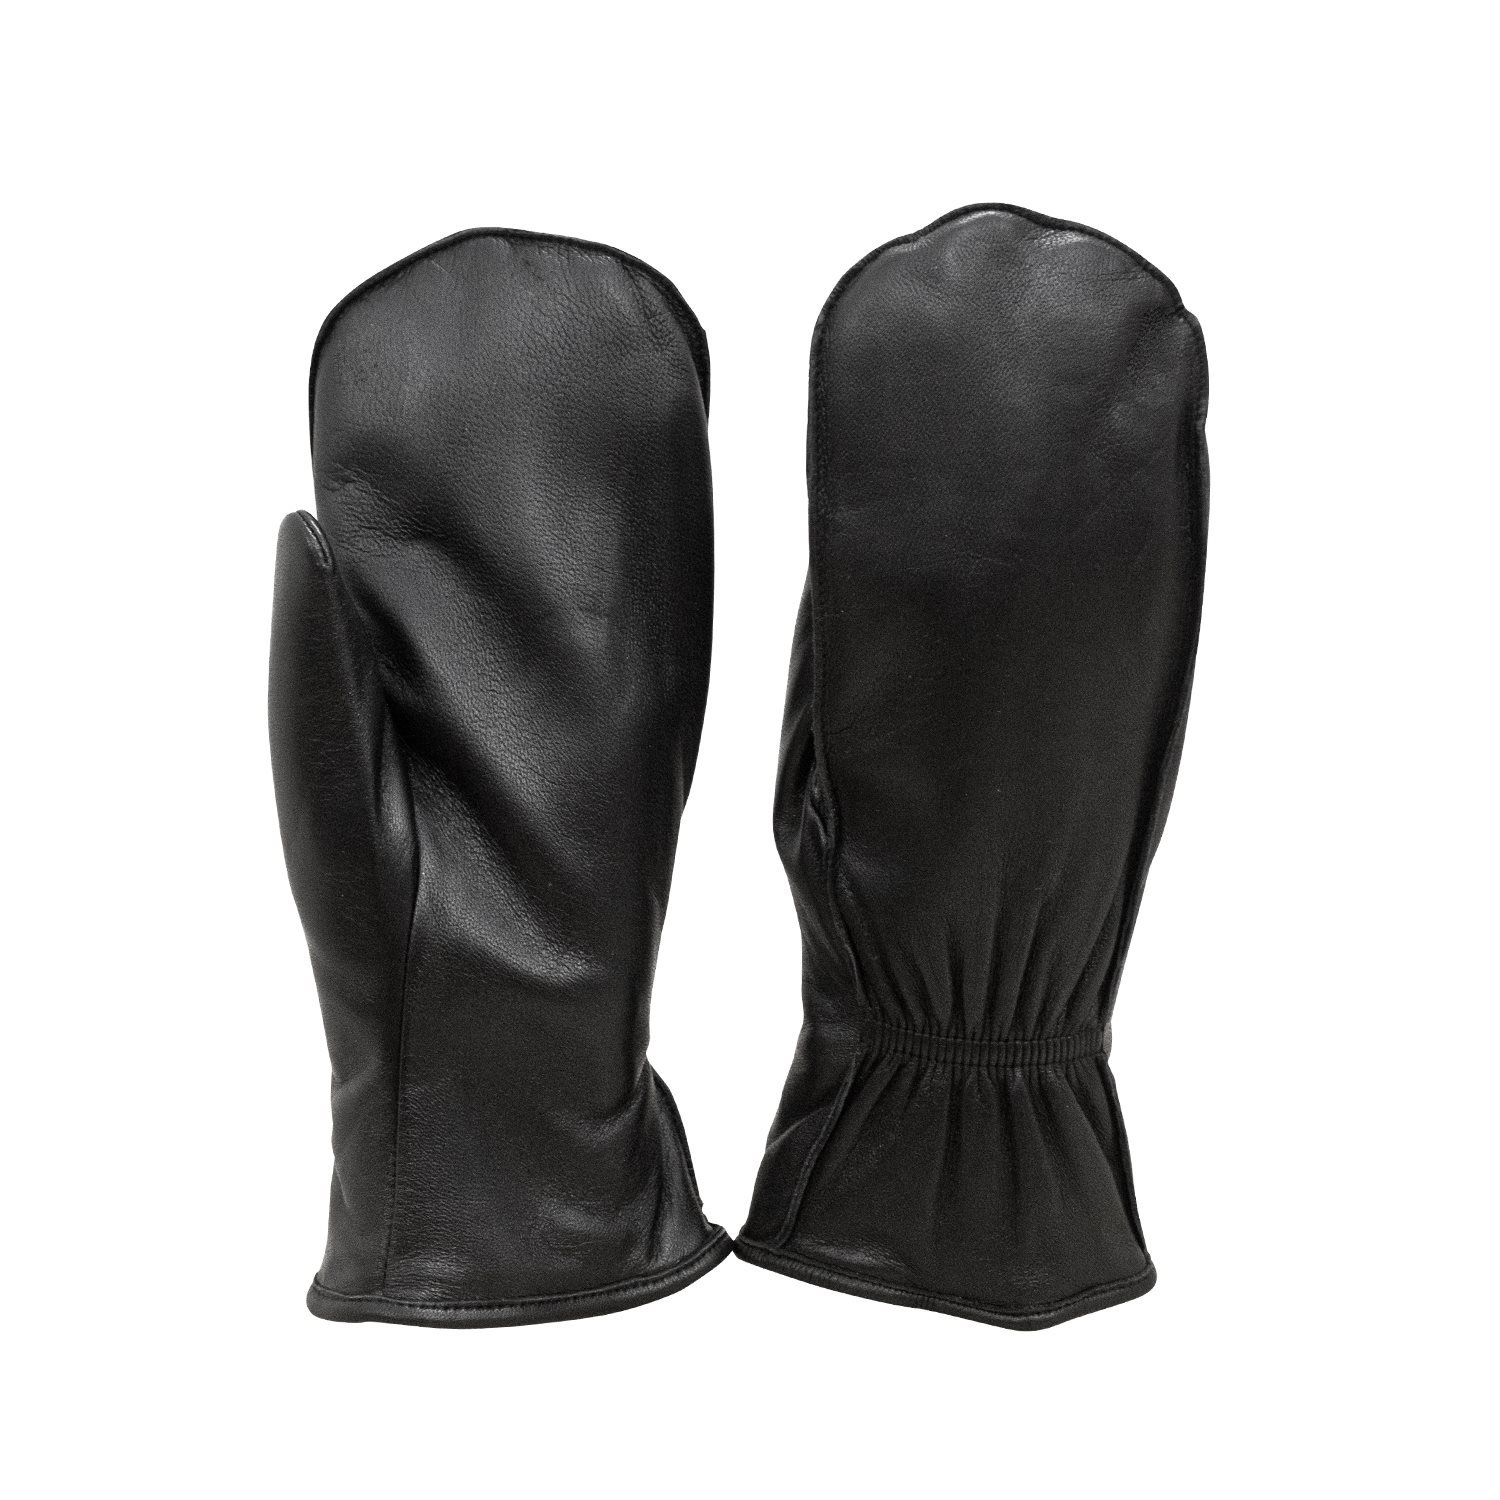 Glitten Leather Gloves